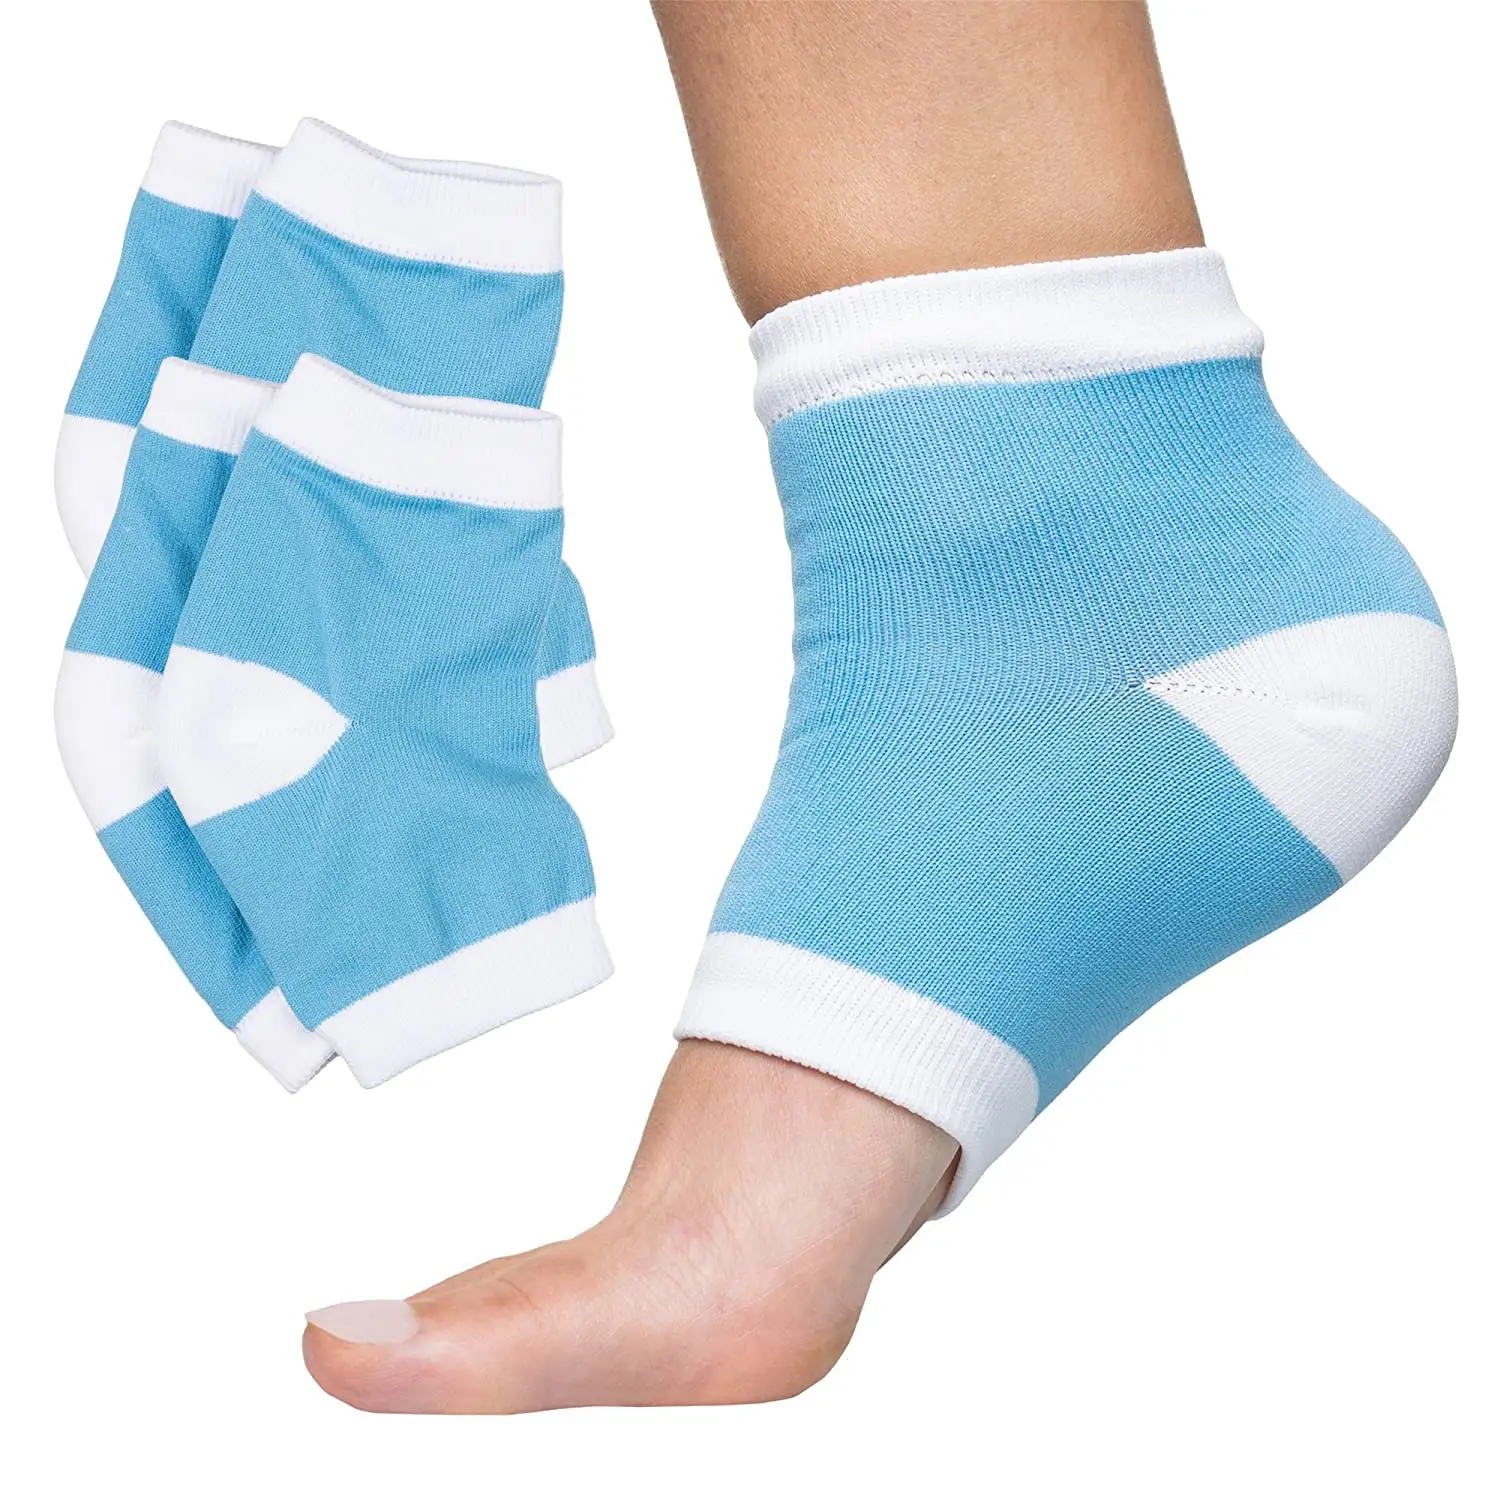 Moisturizing Heel Socks Gel Lined Toeless Cracked Heels Spa Socks to Heal and Treat Dry While You Sleep for Unisex